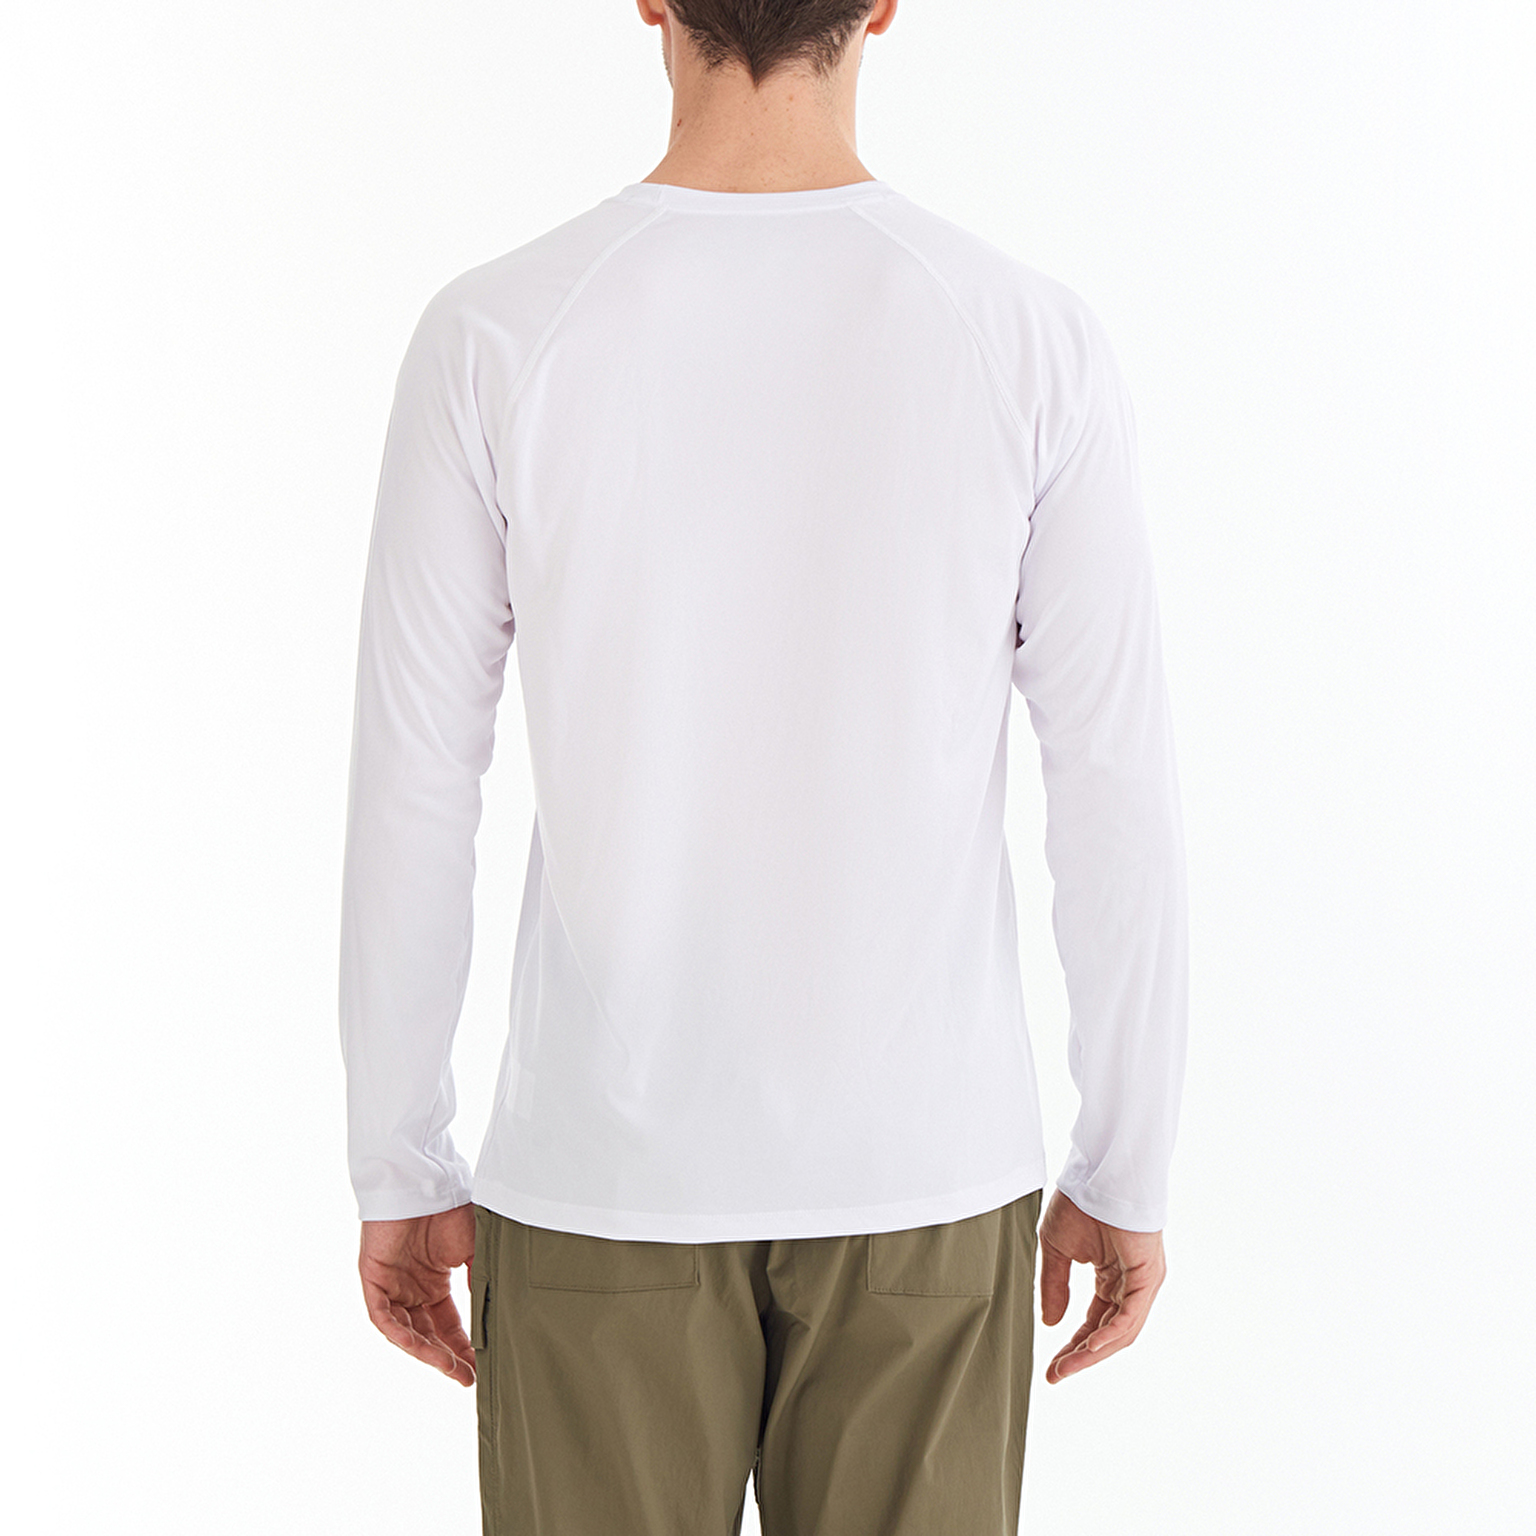 M Summerdry Solid Erkek Uzun Kollu T-Shirt